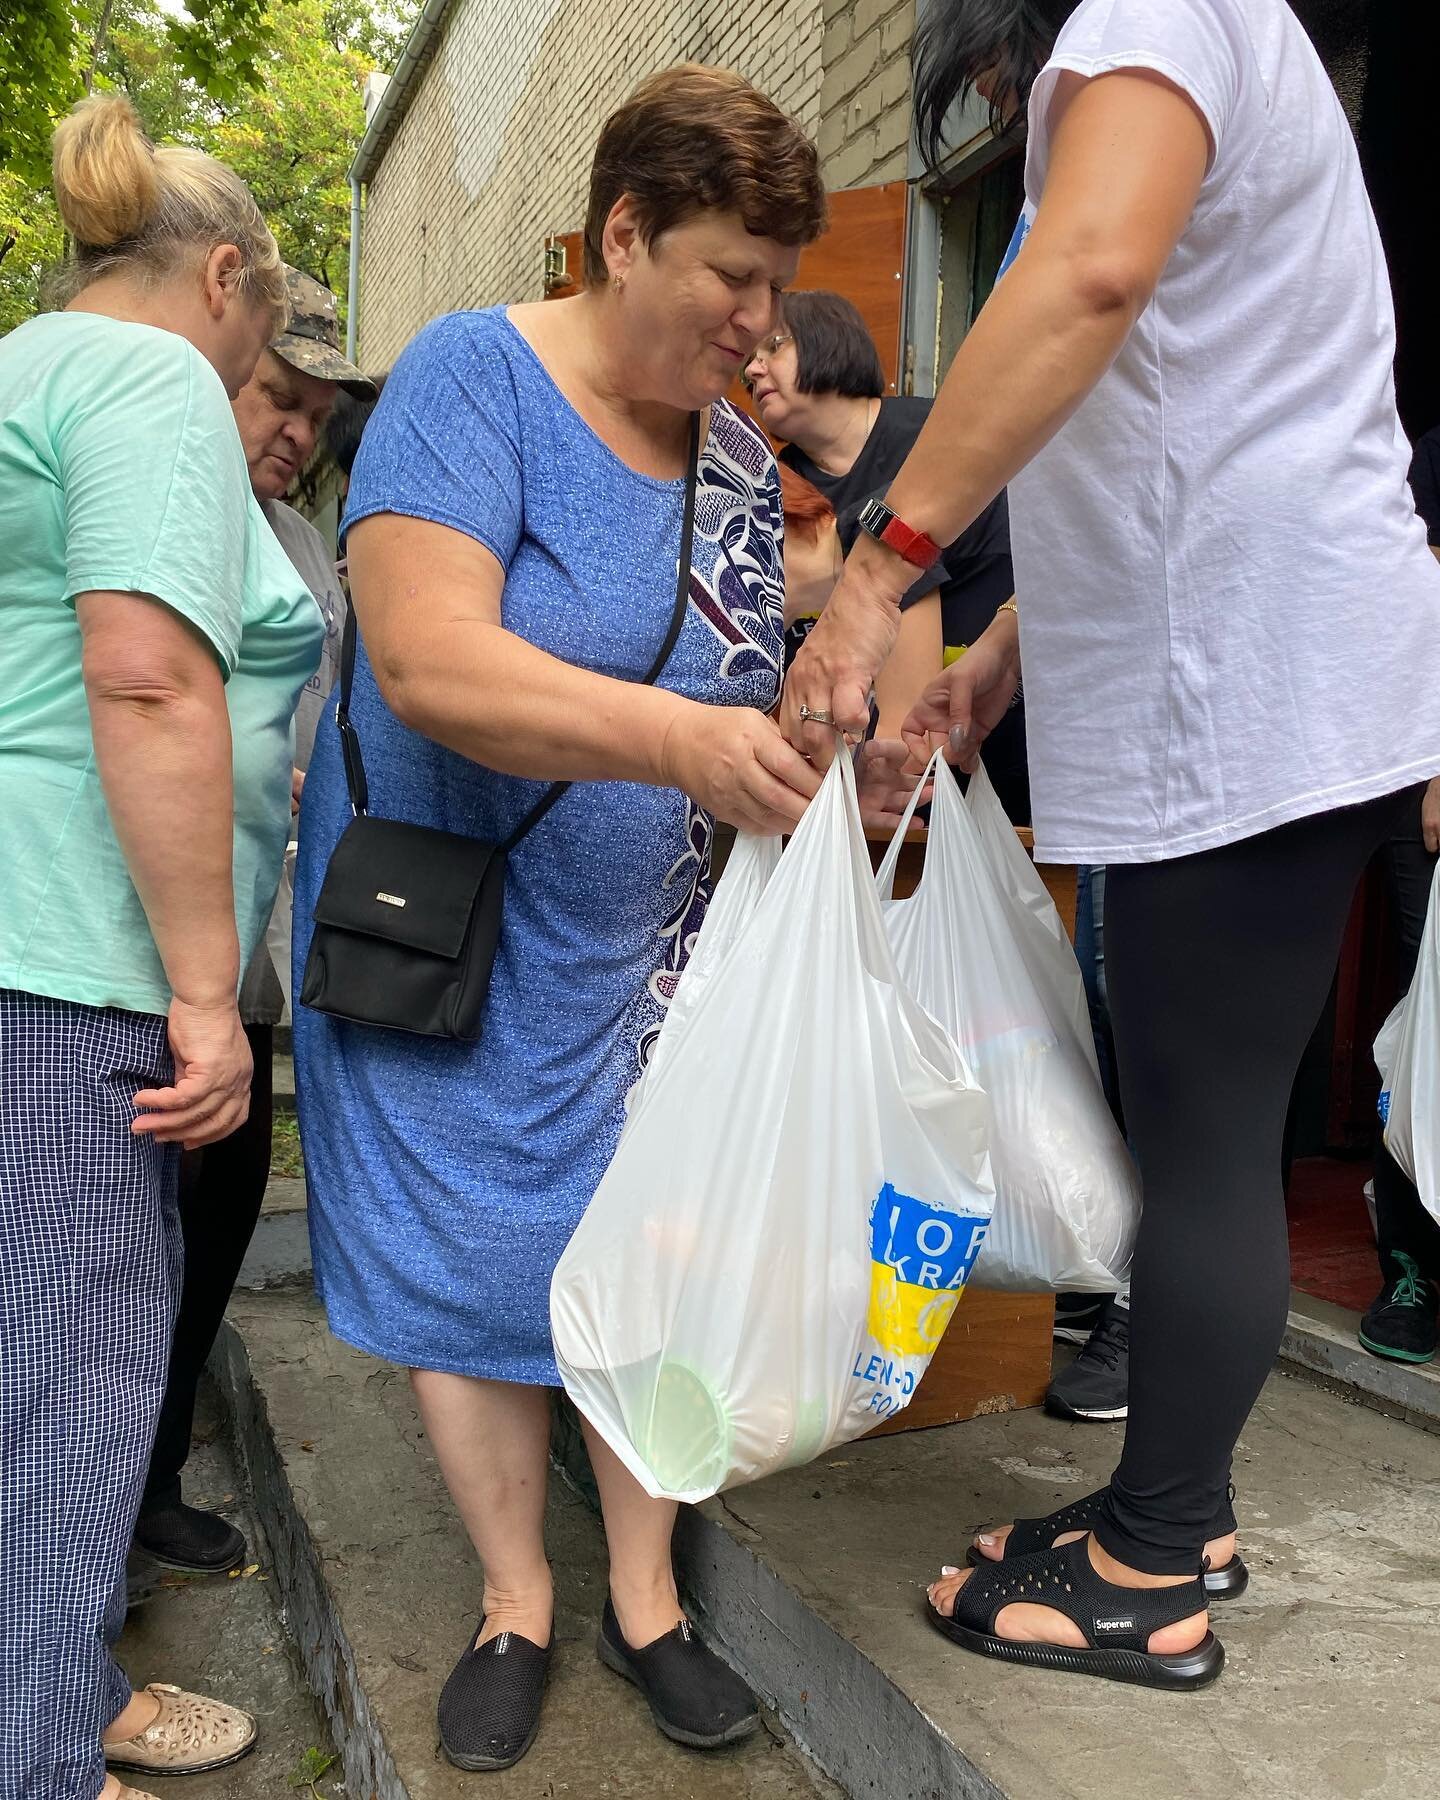 200 more food packages were received by internally displaced persons
_______________

🇺🇦Ще 200 продуктових наборів отримали внутрішньо переміщені особи 

#lendahandfoundation #volunteering #Ukraine #H4UA